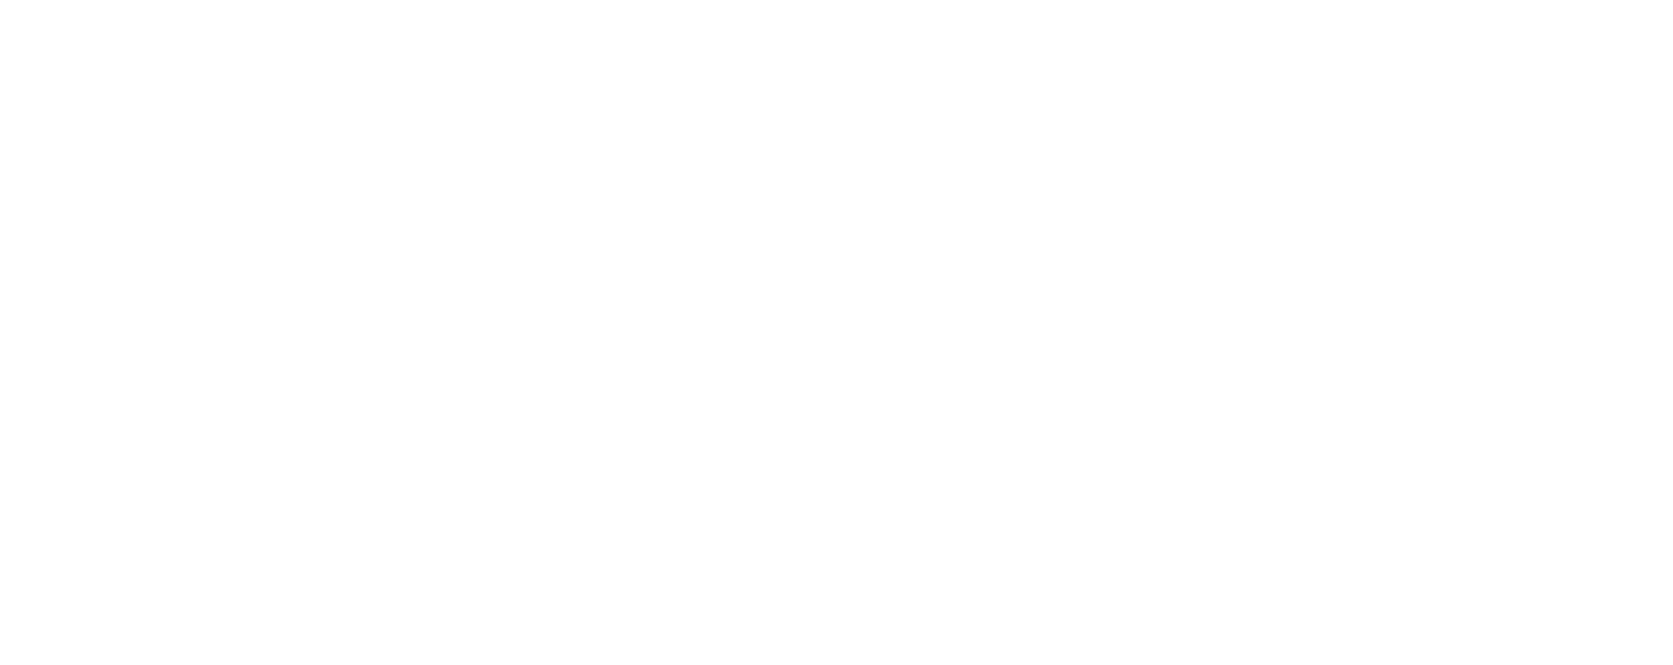 Novotel Bangkok Siam Square - ECommerce Site